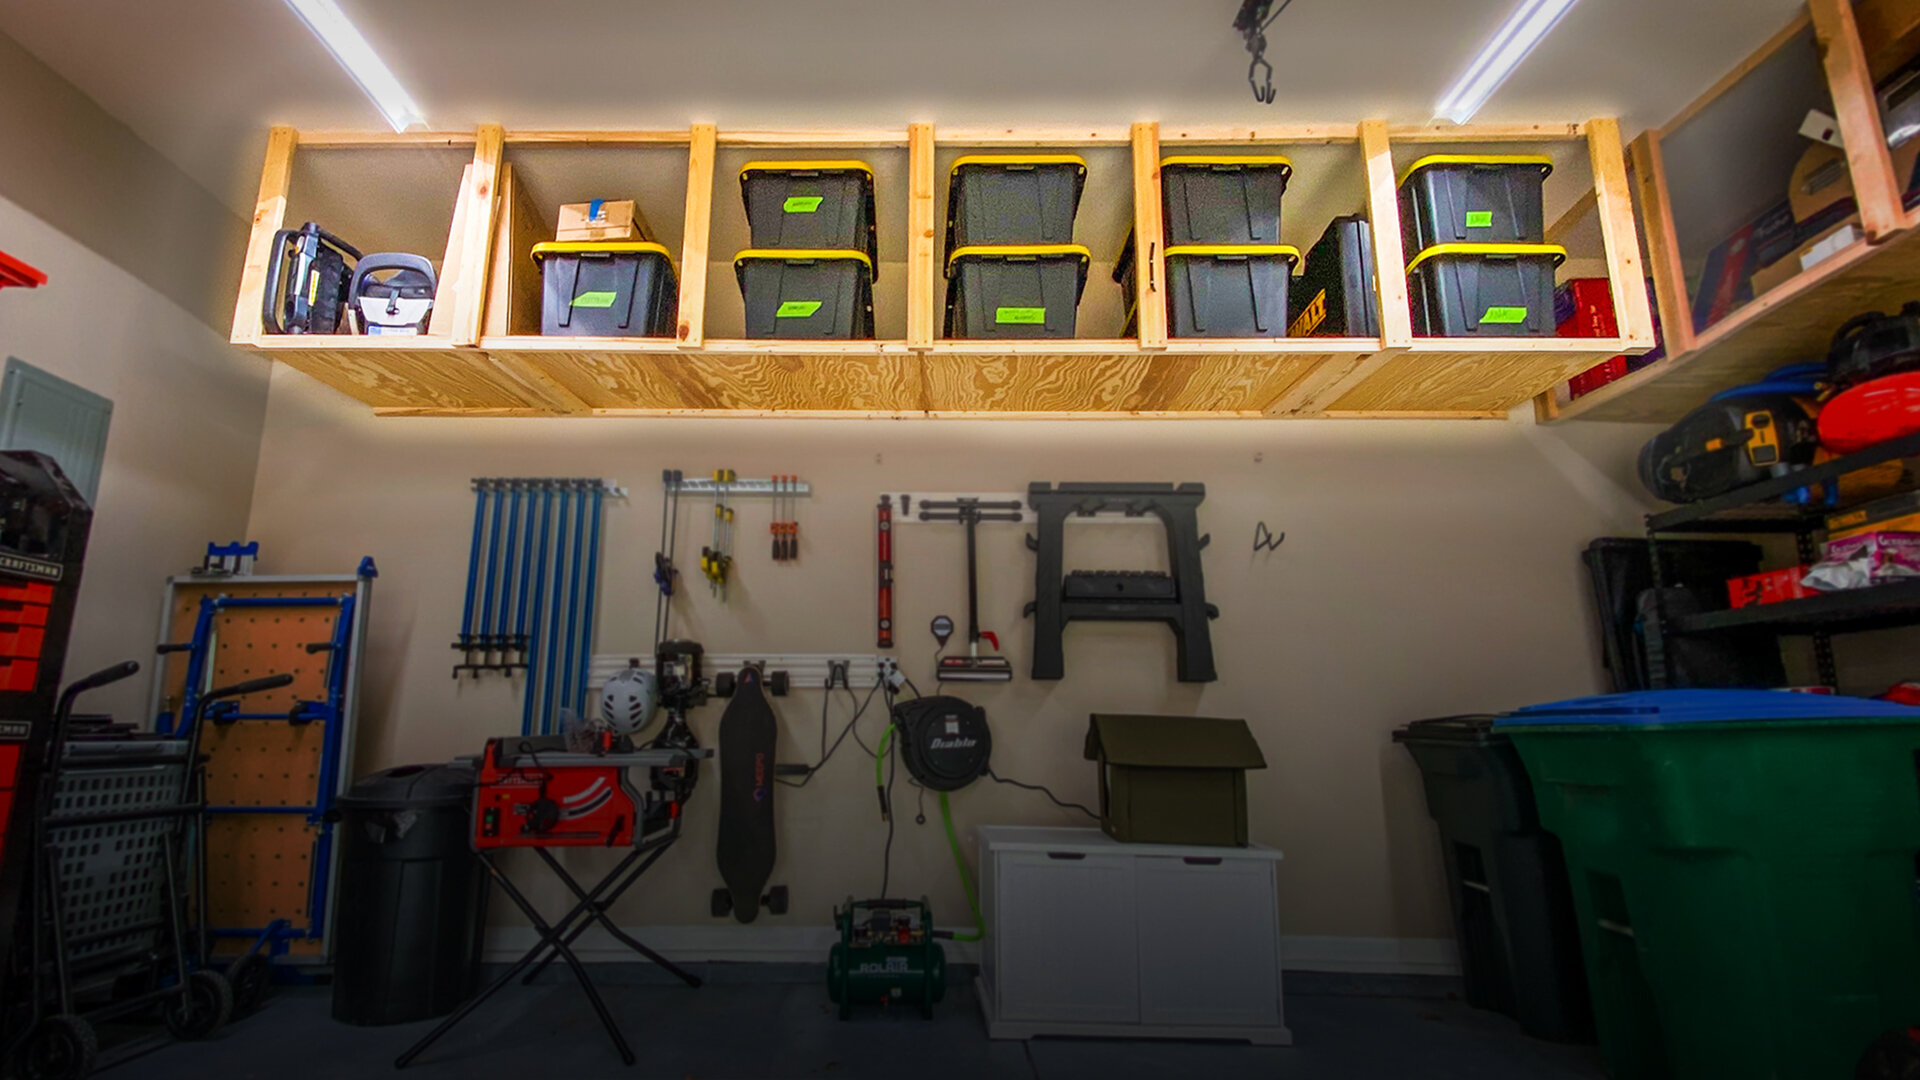 How To Build Diy Garage Storage Shelves, How To Build A Garage Overhead Storage